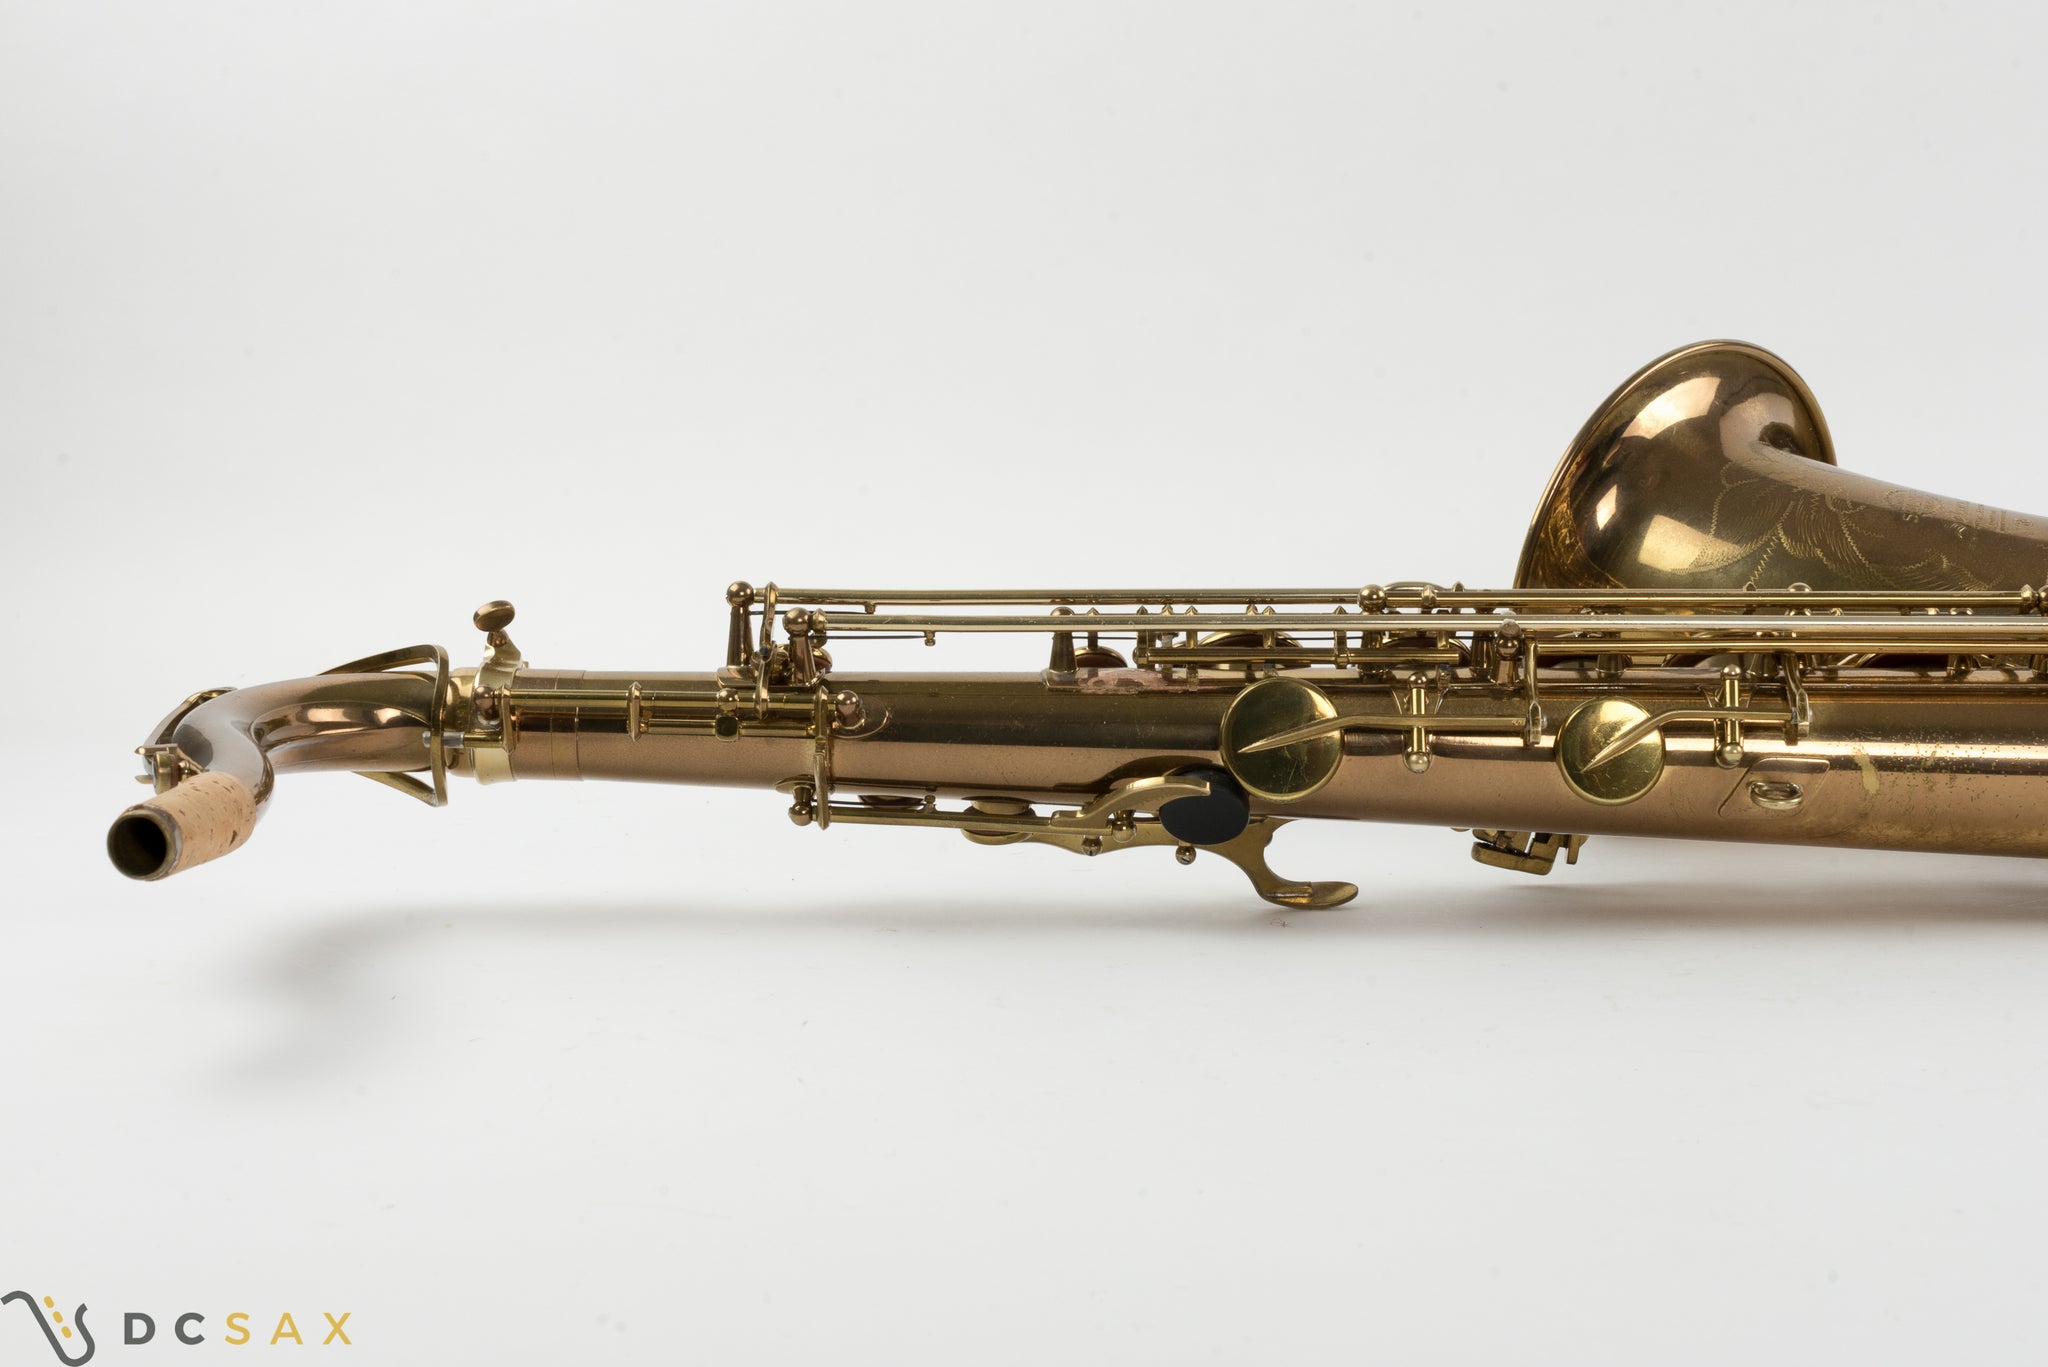 100,xxx 1962 Selmer Mark VI Tenor Saxophone, 97% Original Lacquer, Overhaul, Chris Potter S/N, Video